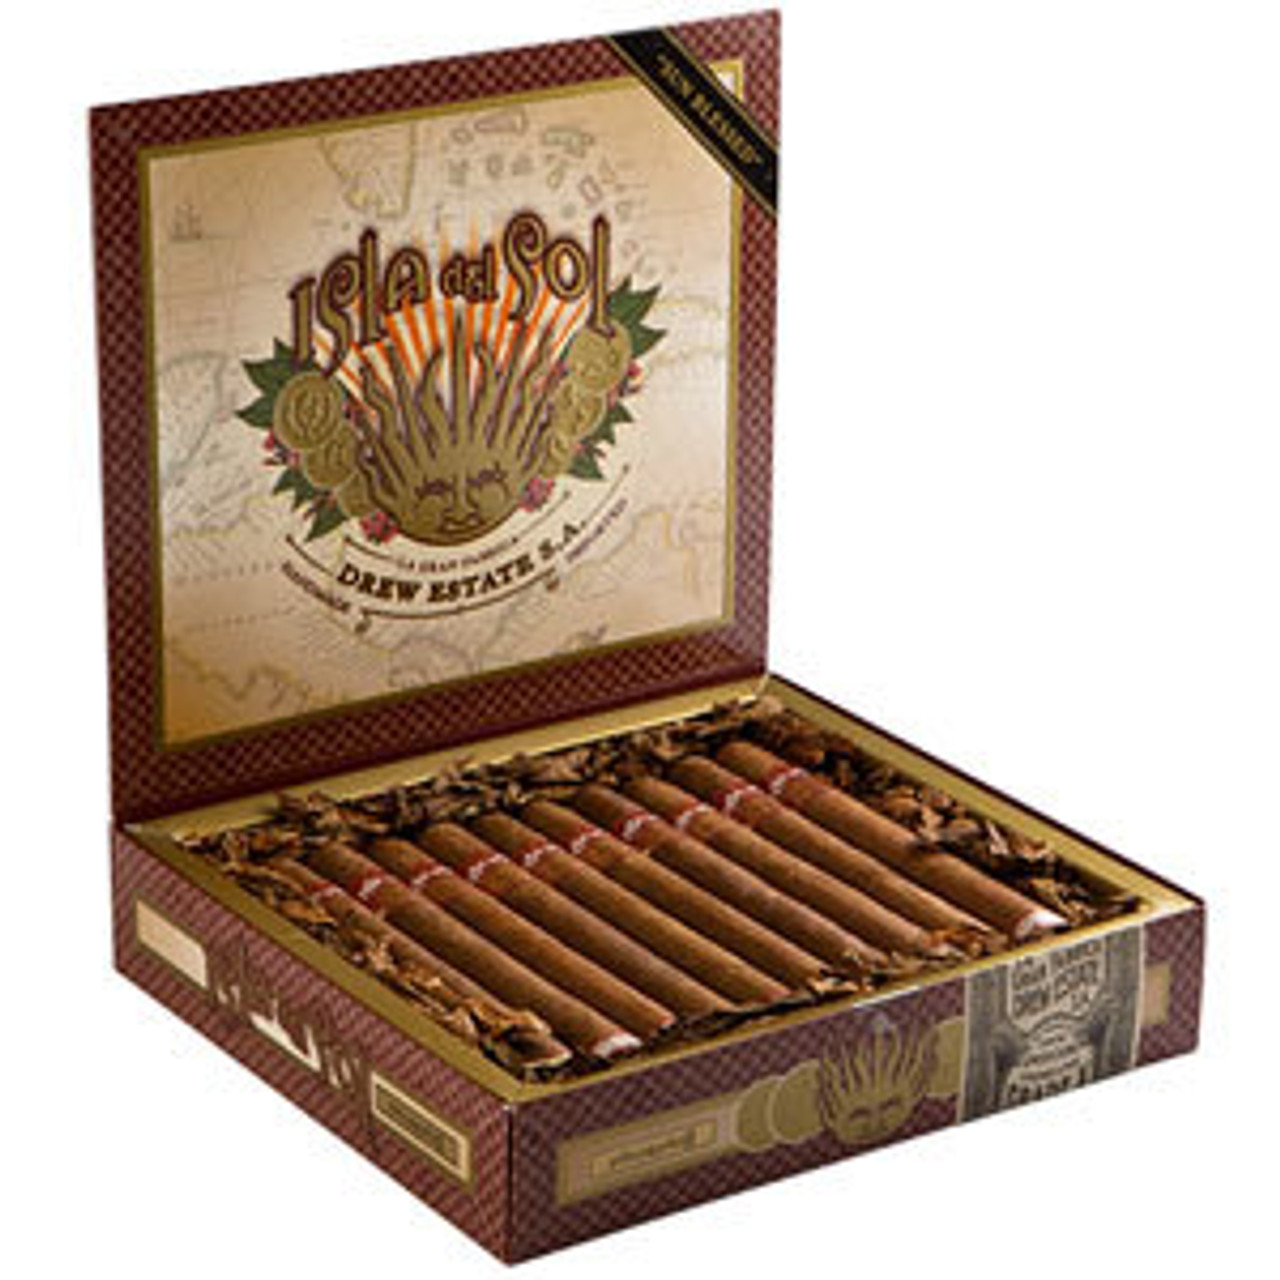 Isla del Sol Gordito Sun Grown Cigars - 6 x 60 (Box of 16)